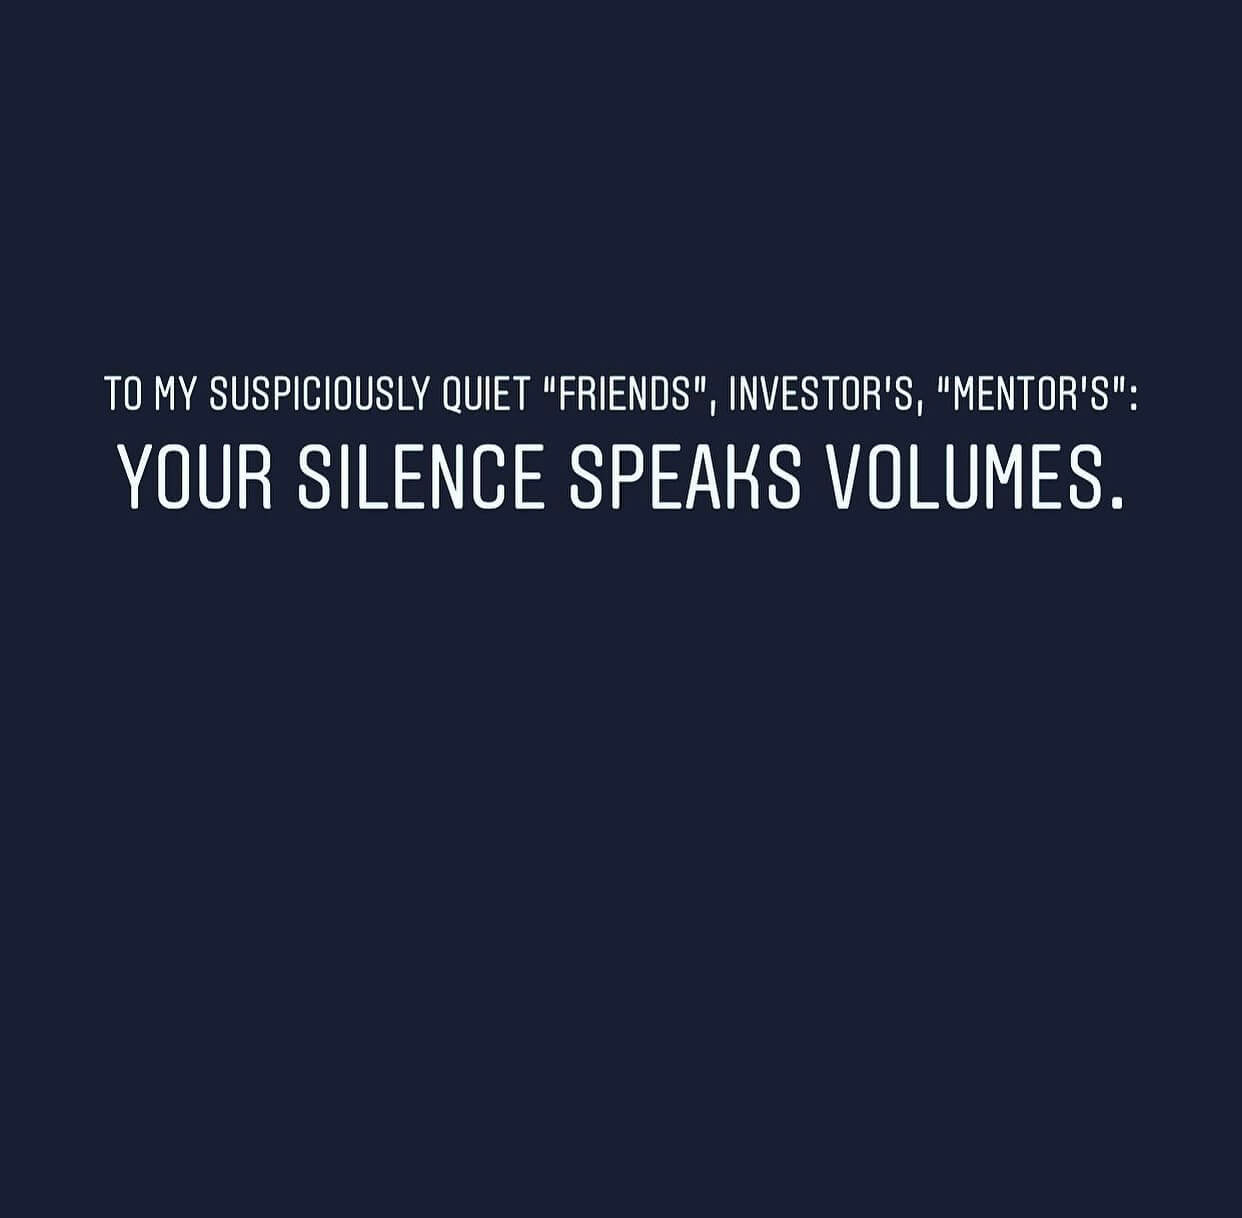 Silence Speaks Volumes